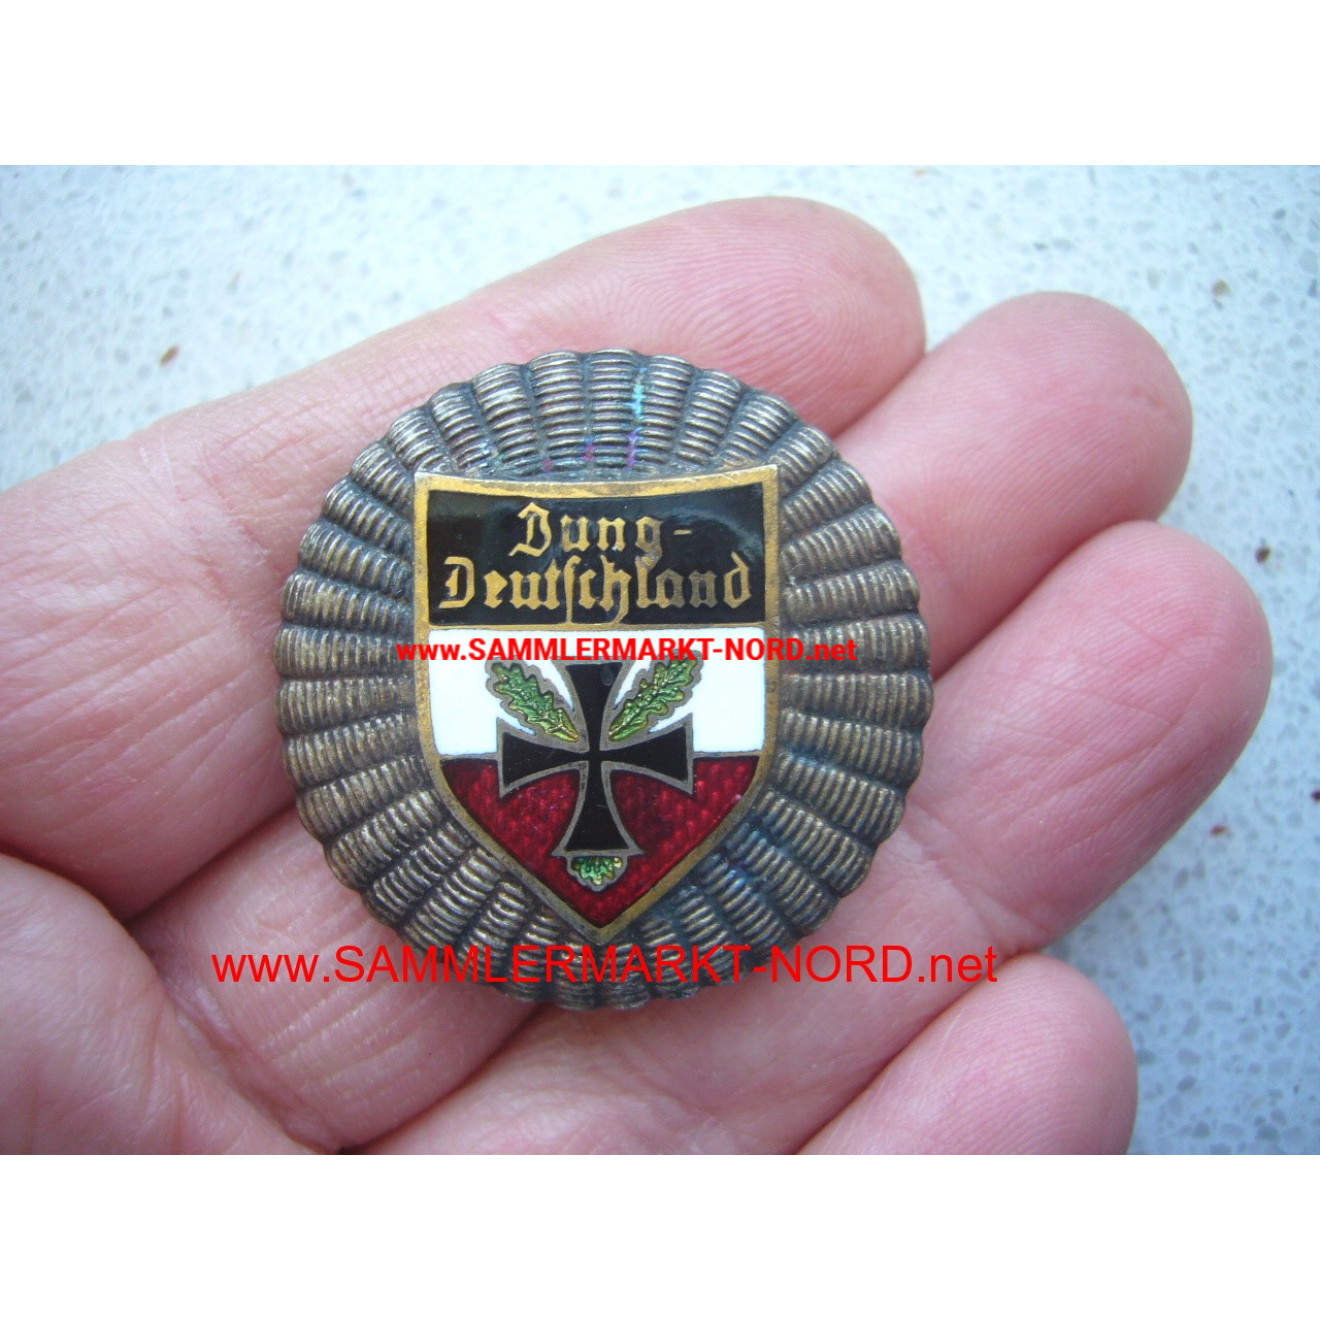 Jungdeutschland - silver badge of honor 2. version